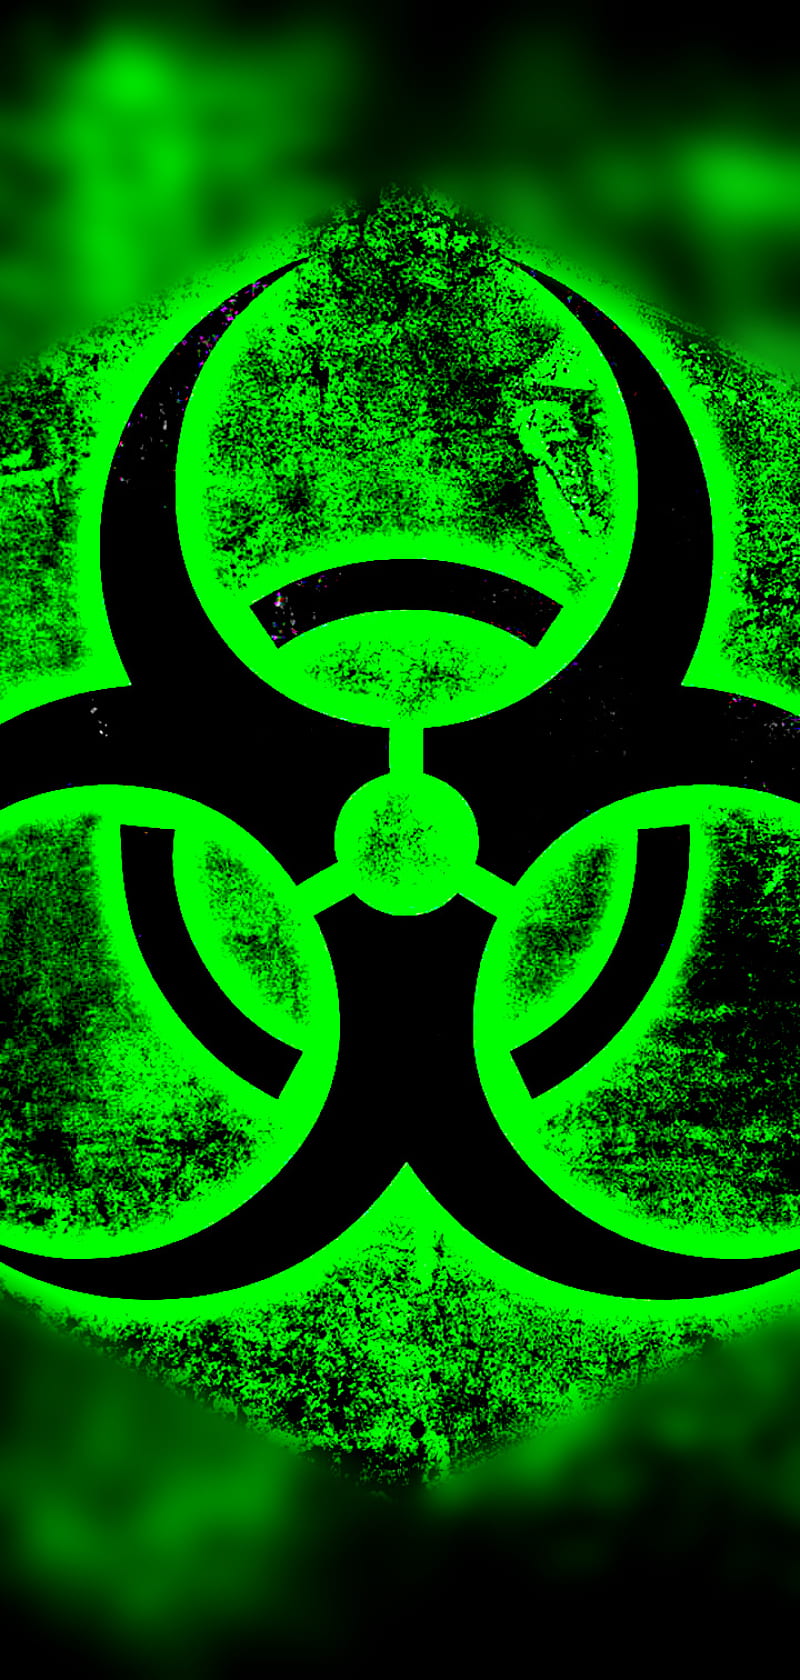 HD wallpaper biohazard illuminated night green color one person  glowing  Wallpaper Flare